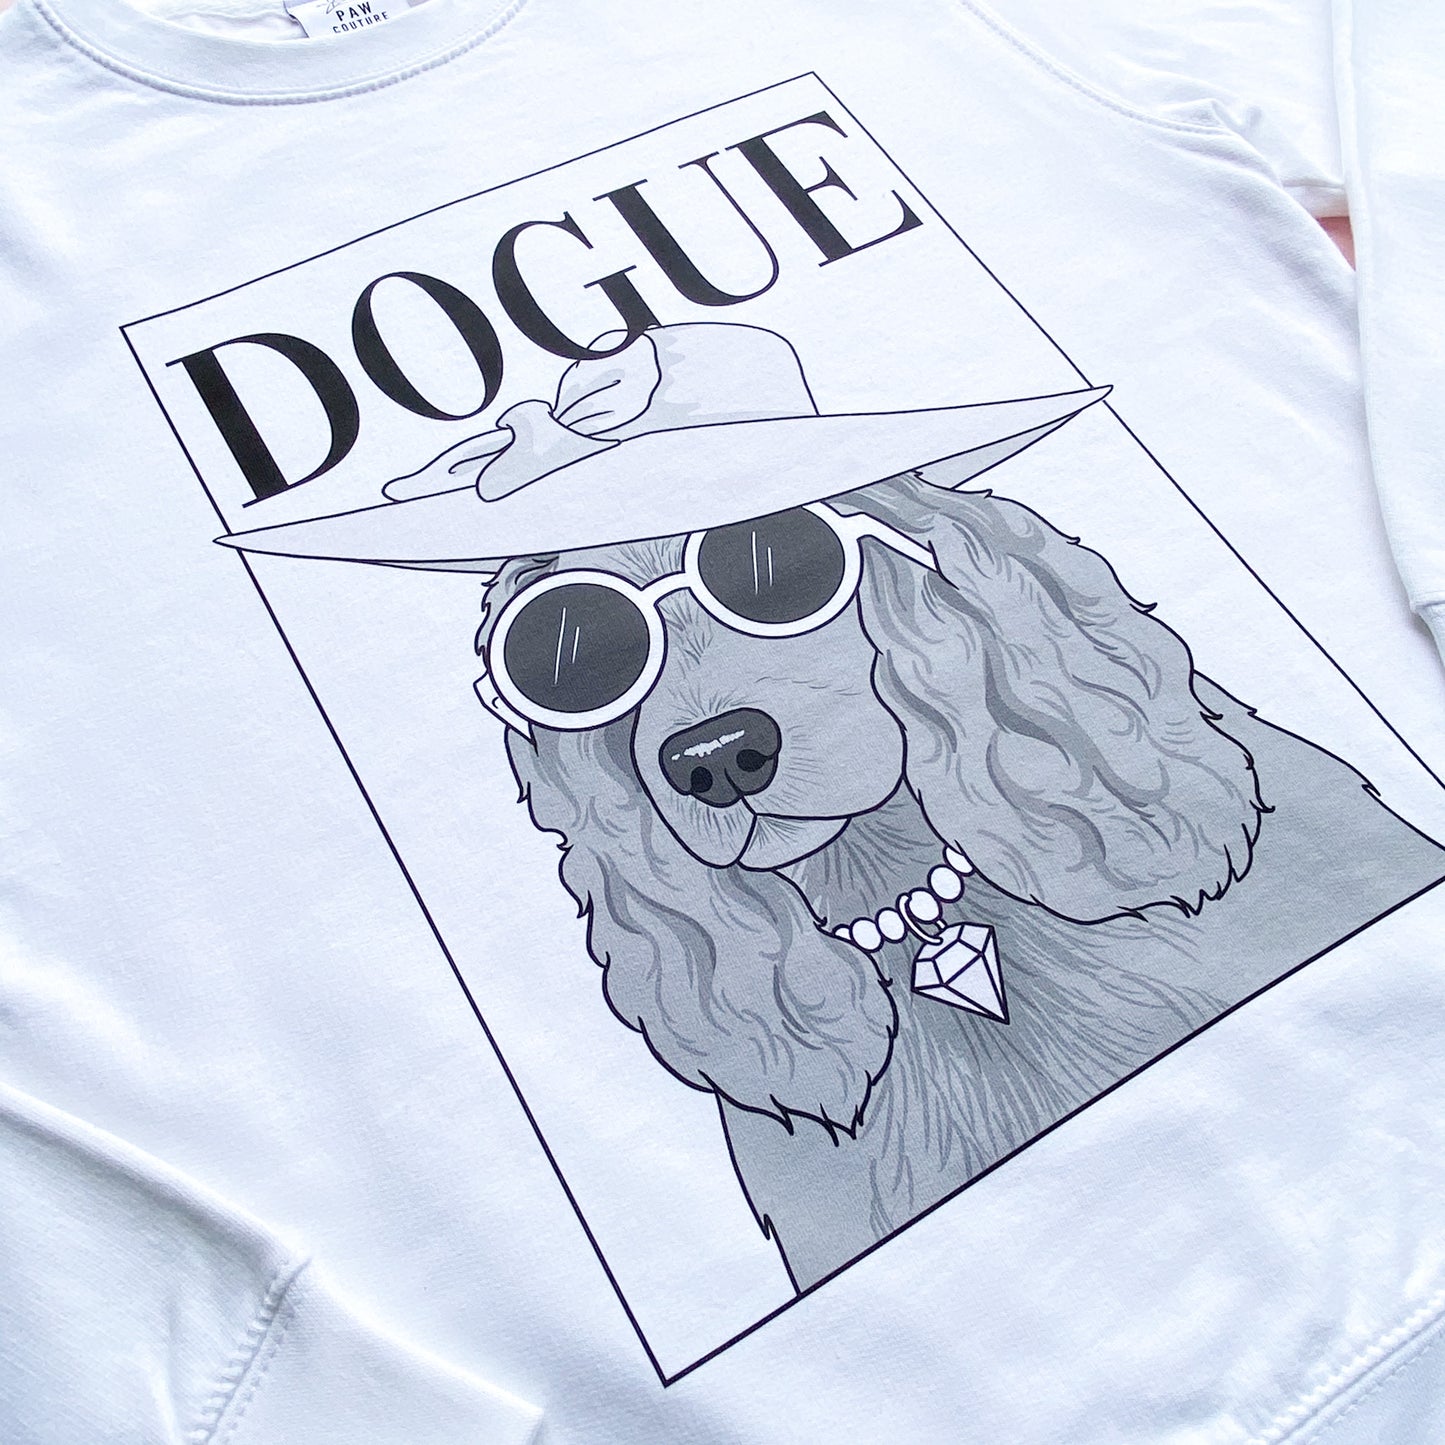 Dogue White Sweatshirt